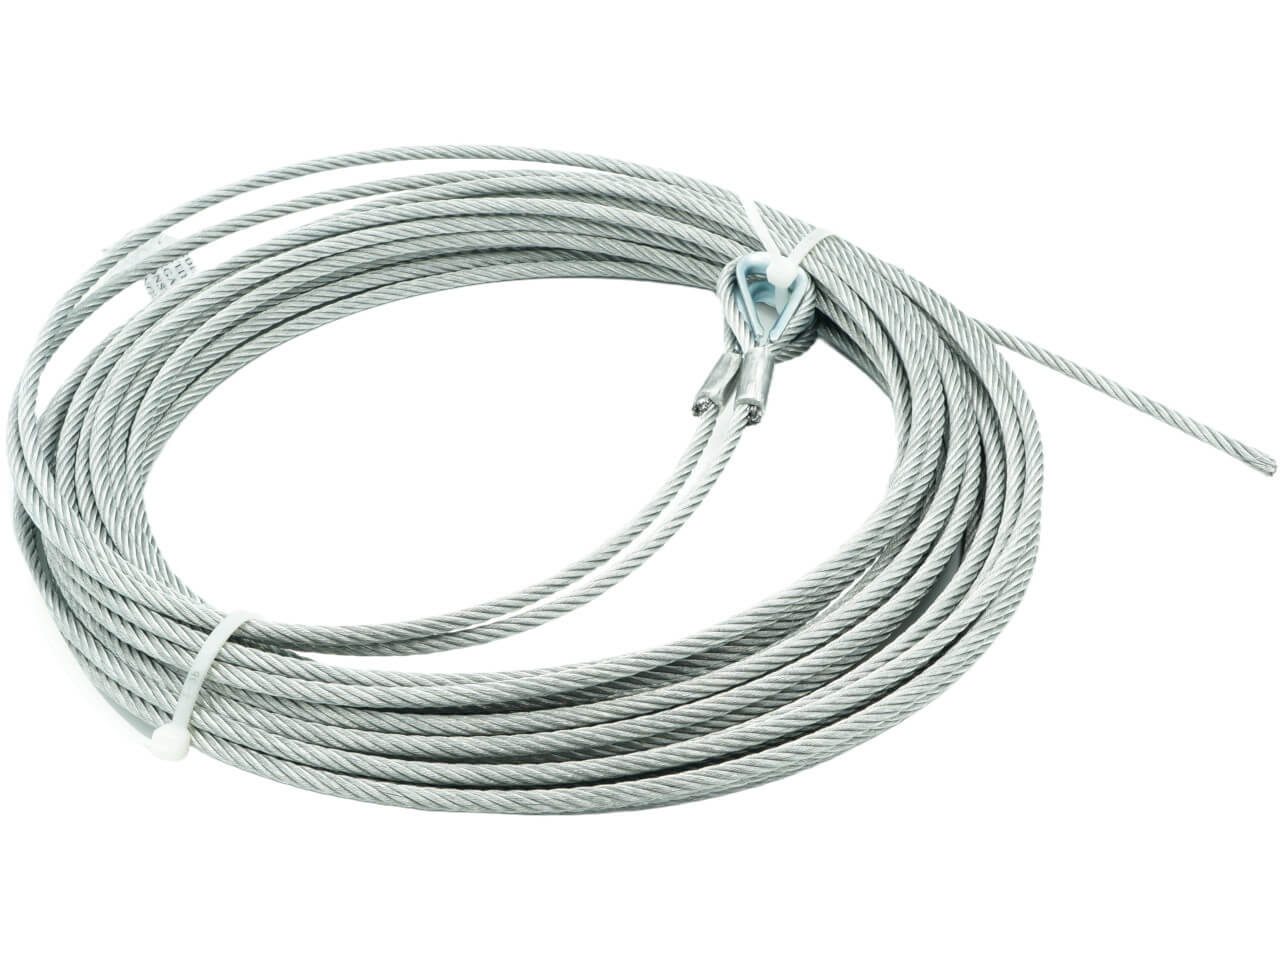 Cable Diameter 5,0mm Length 8m